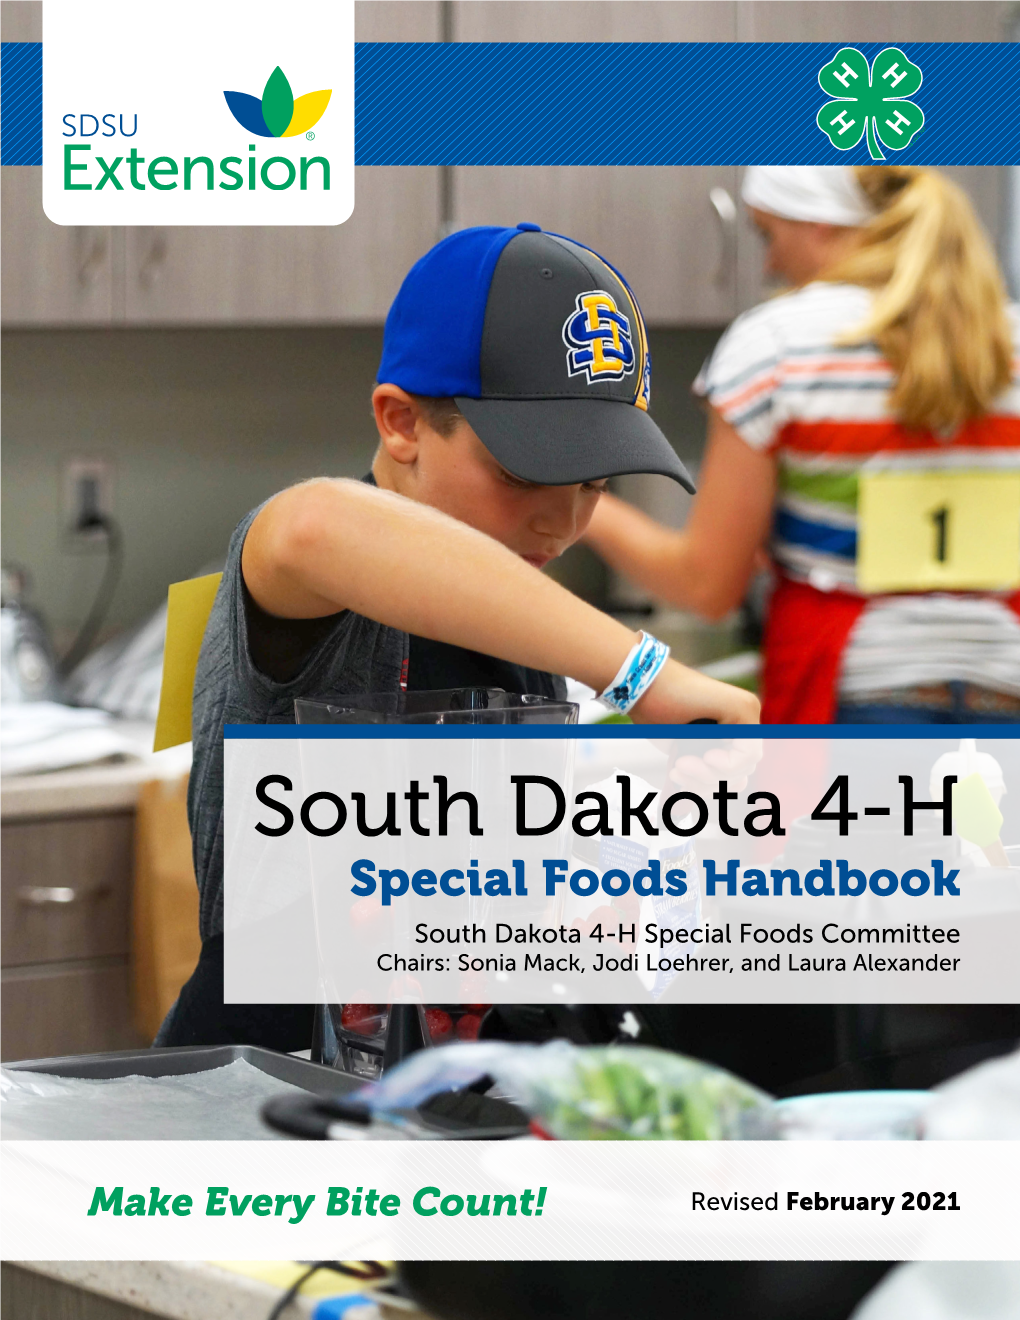 South Dakota 4-H Special Foods Handbook South Dakota 4-H Special Foods Committee Chairs: Sonia Mack, Jodi Loehrer, and Laura Alexander